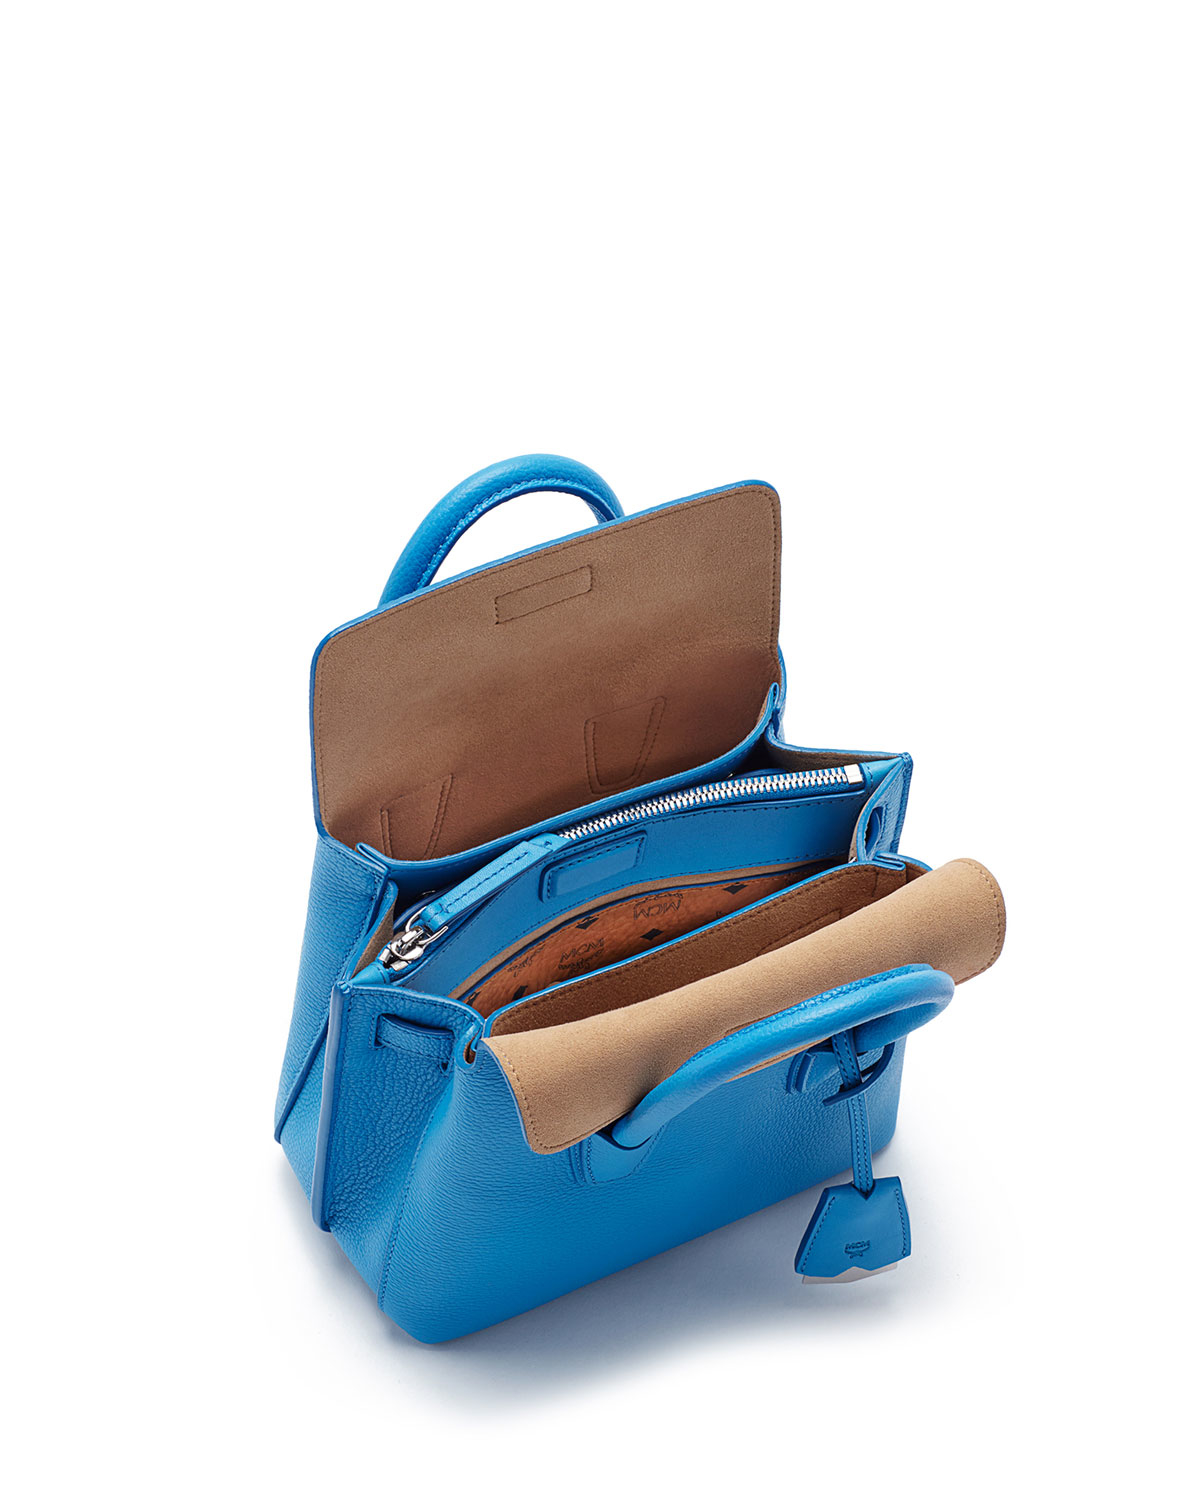 MCM Milla Mini Tote Bag in Blue - Lyst